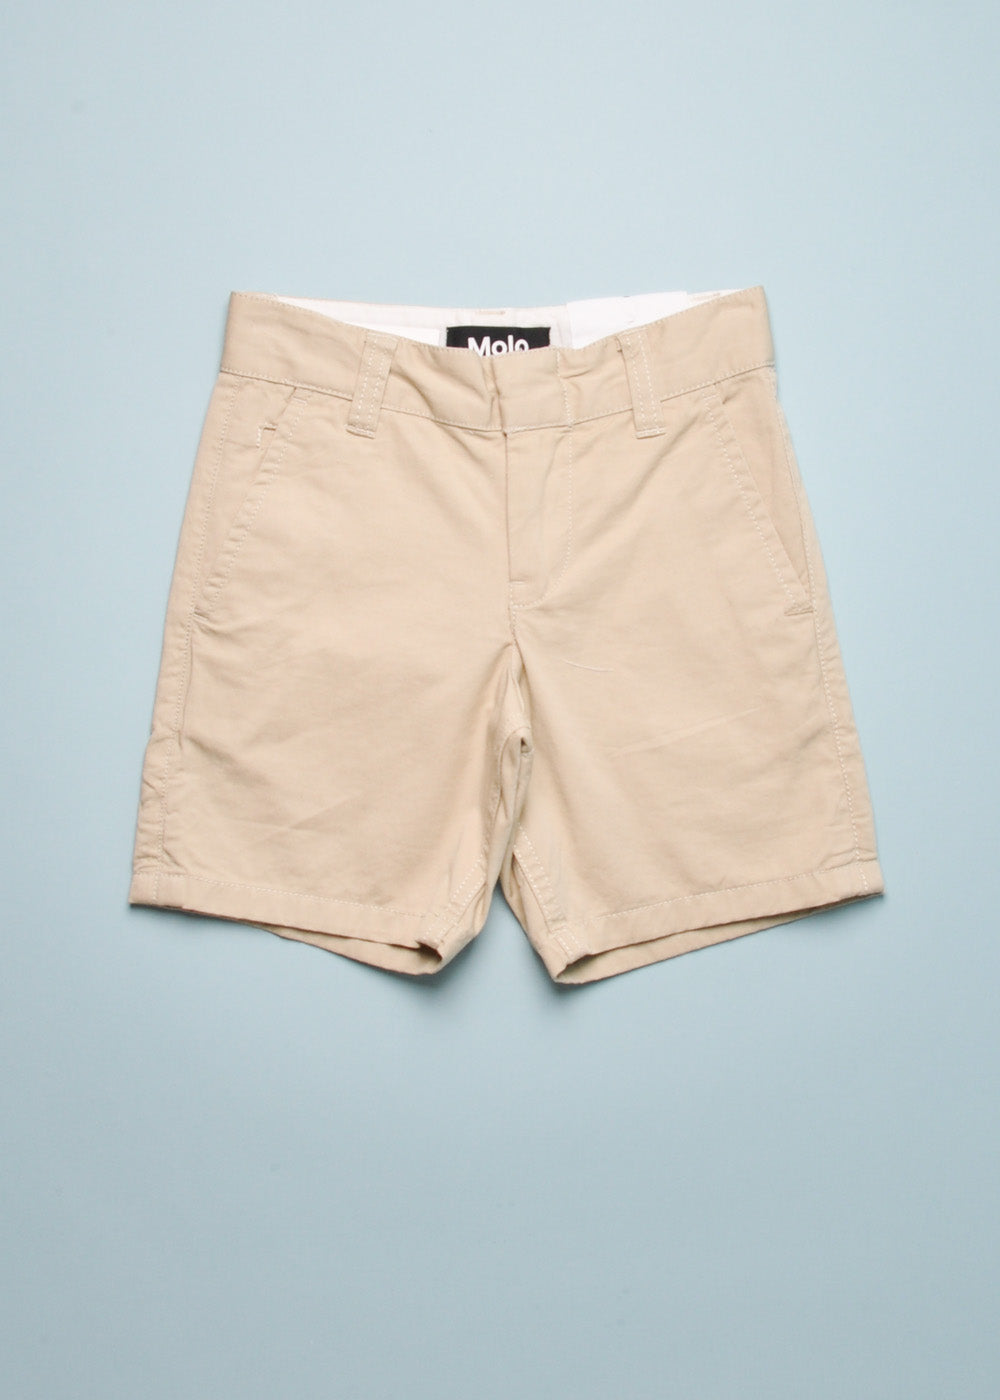 Alan - Overcast - Beige chino shorts - Molo